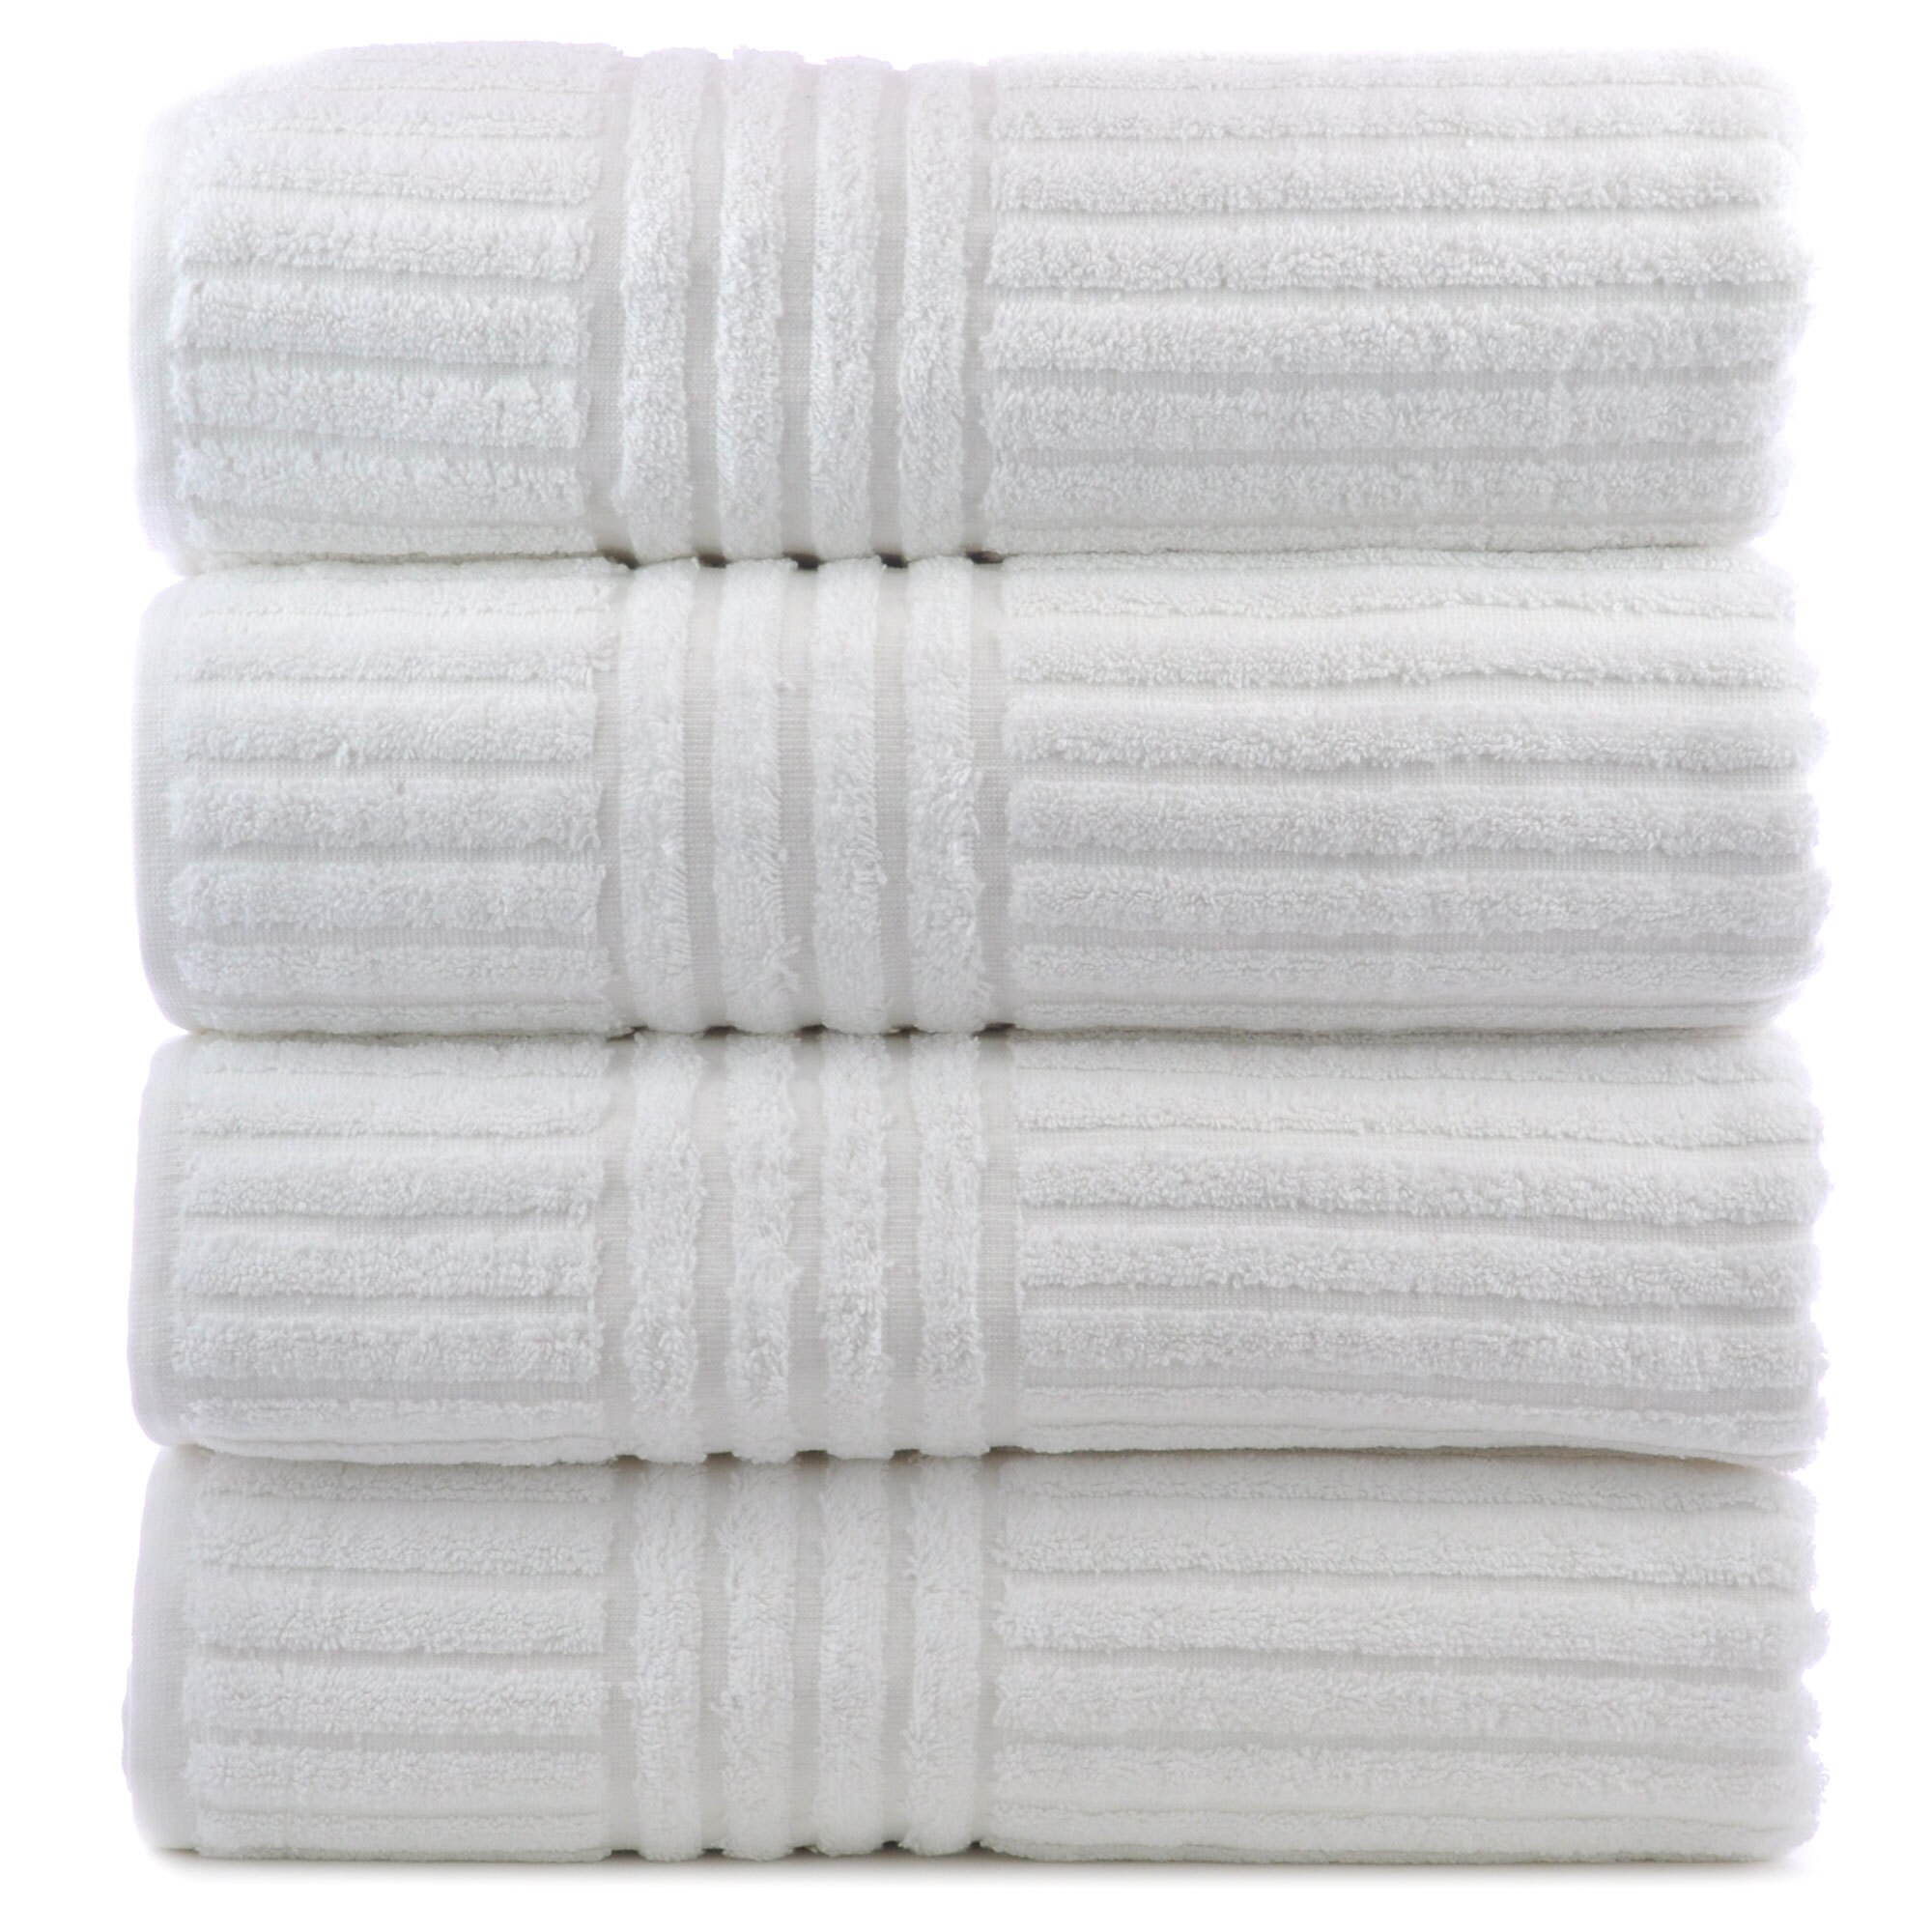 https://ak1.ostkcdn.com/images/products/10102608/Luxury-Hotel-and-Spa-Towel-100-percent-Genuine-Turkish-Cotton-Bath-Towels-Striped-Set-of-4-02844d48-5159-4da6-bf4c-3125323ae218.jpg